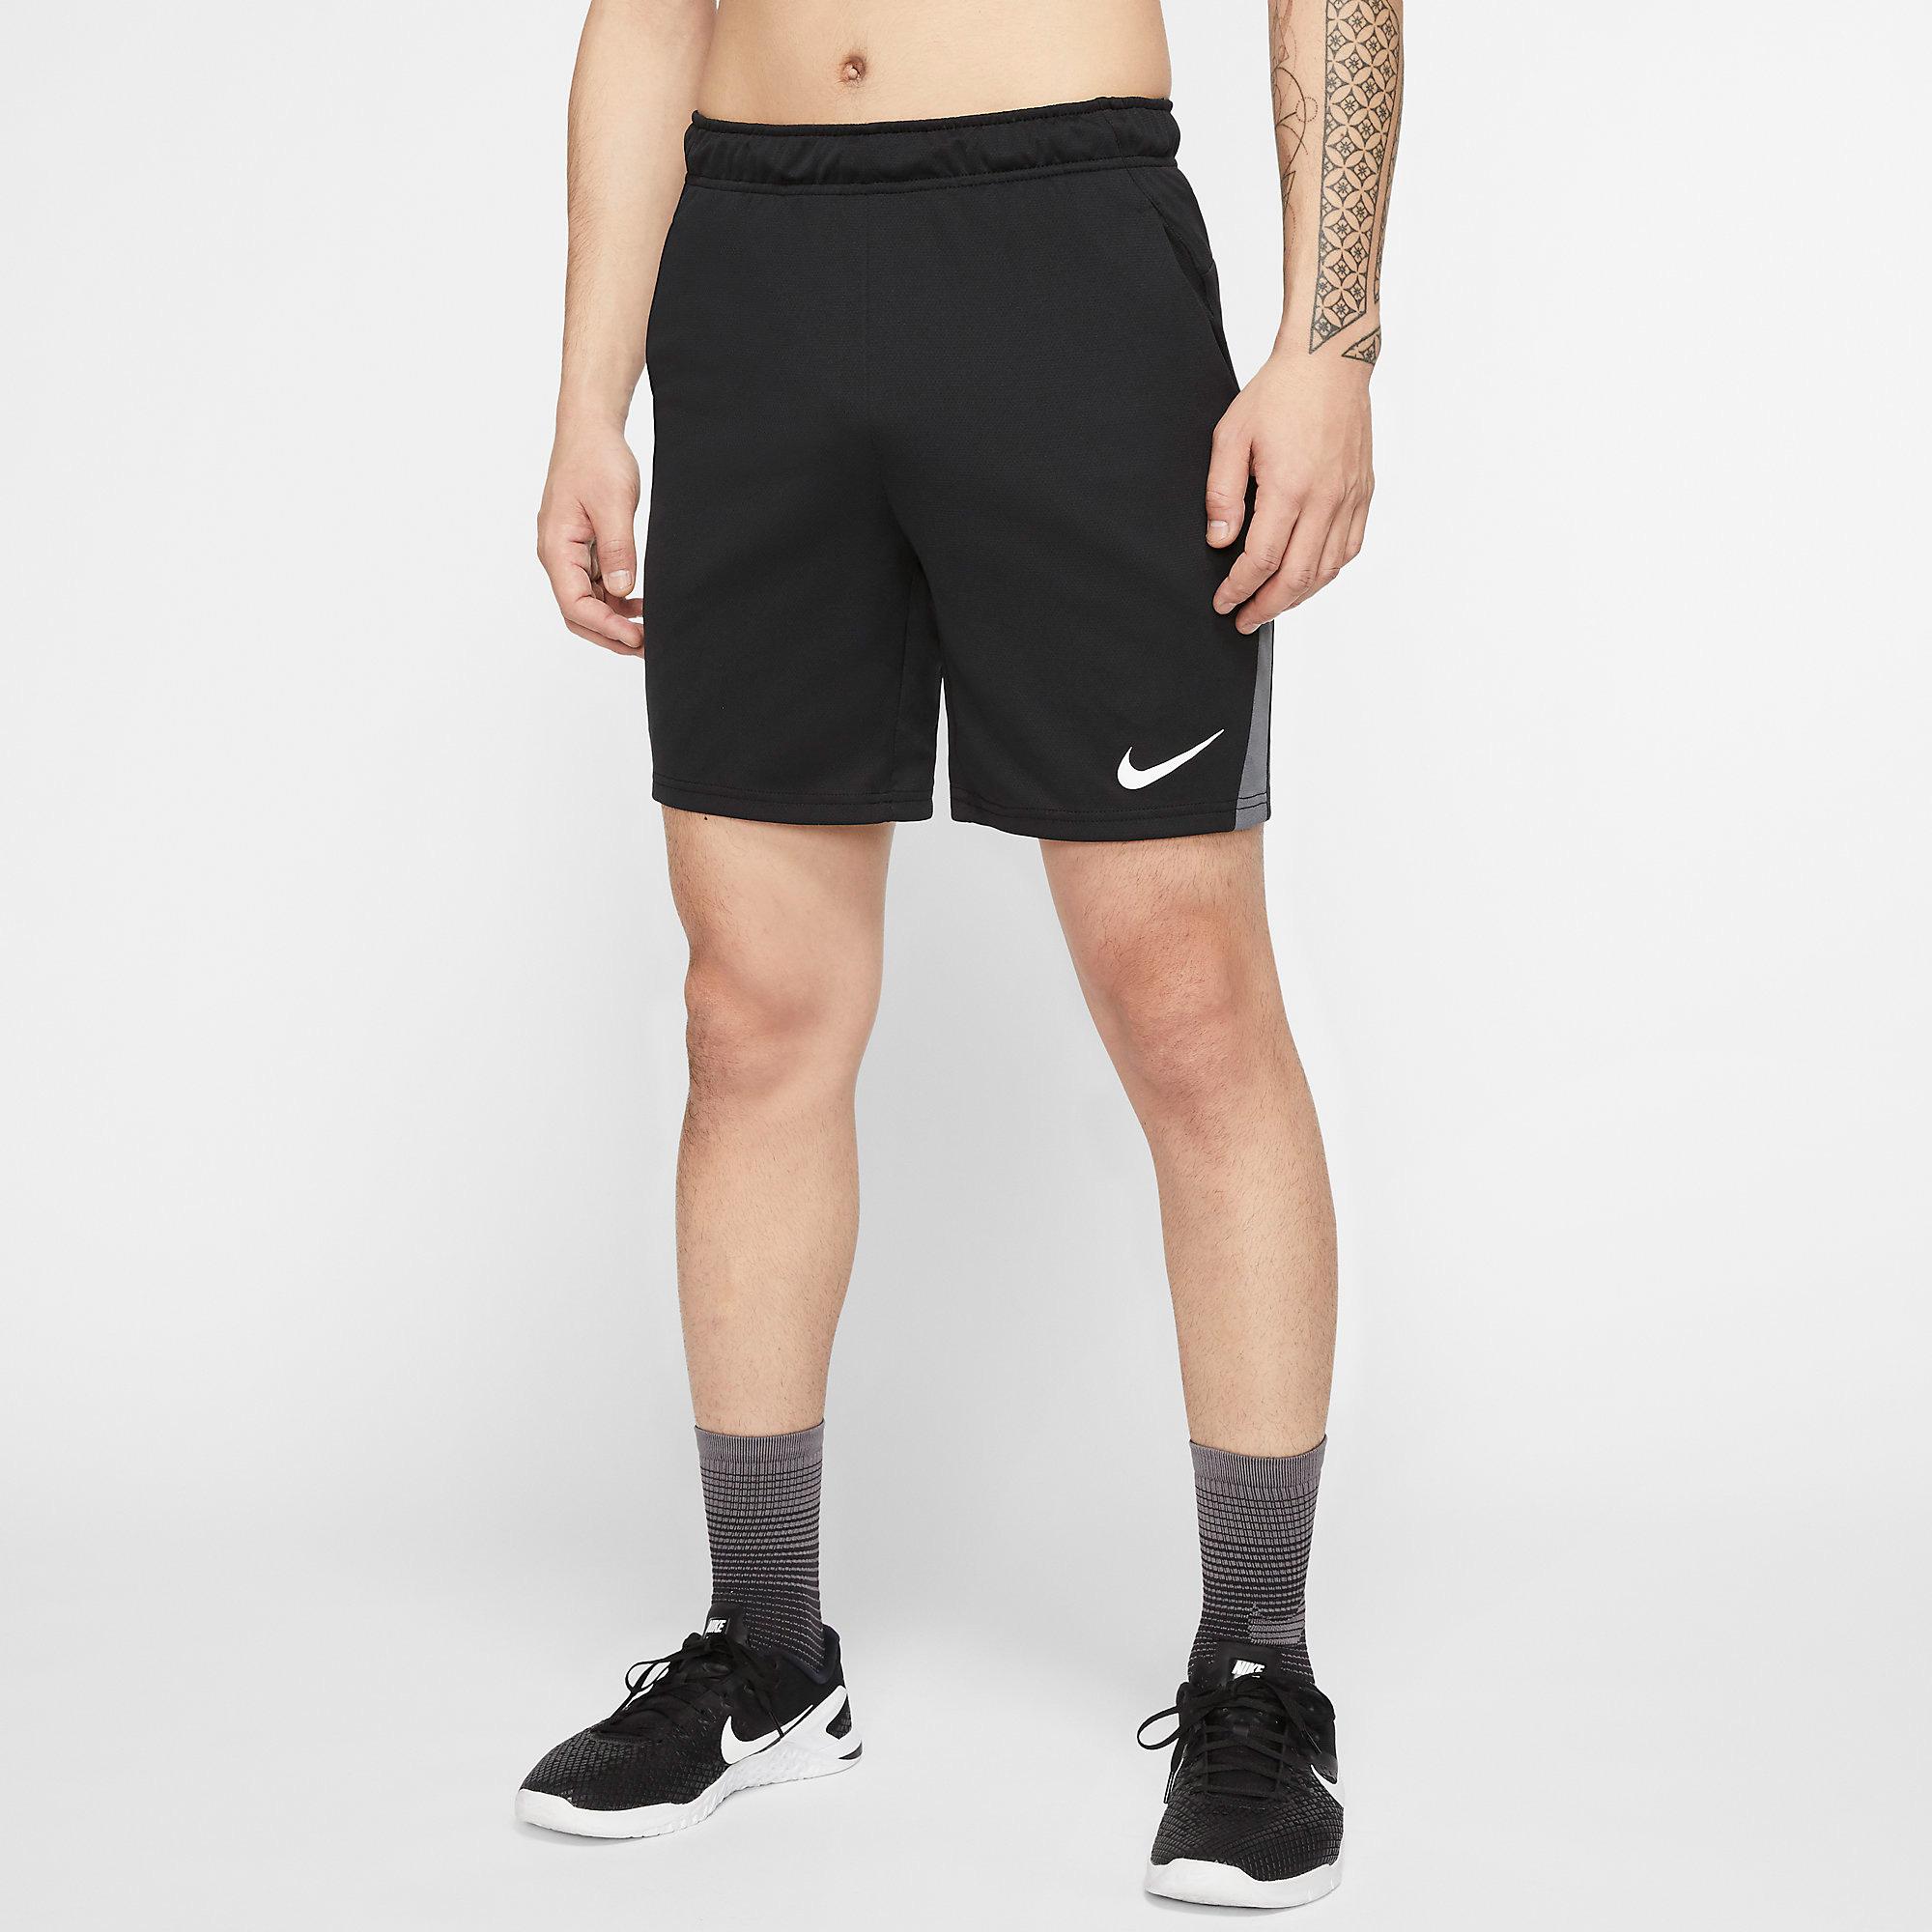 Nike Mens Dri-FIT 7 Inch Training Shorts - Black/Iron Grey - Tennisnuts.com